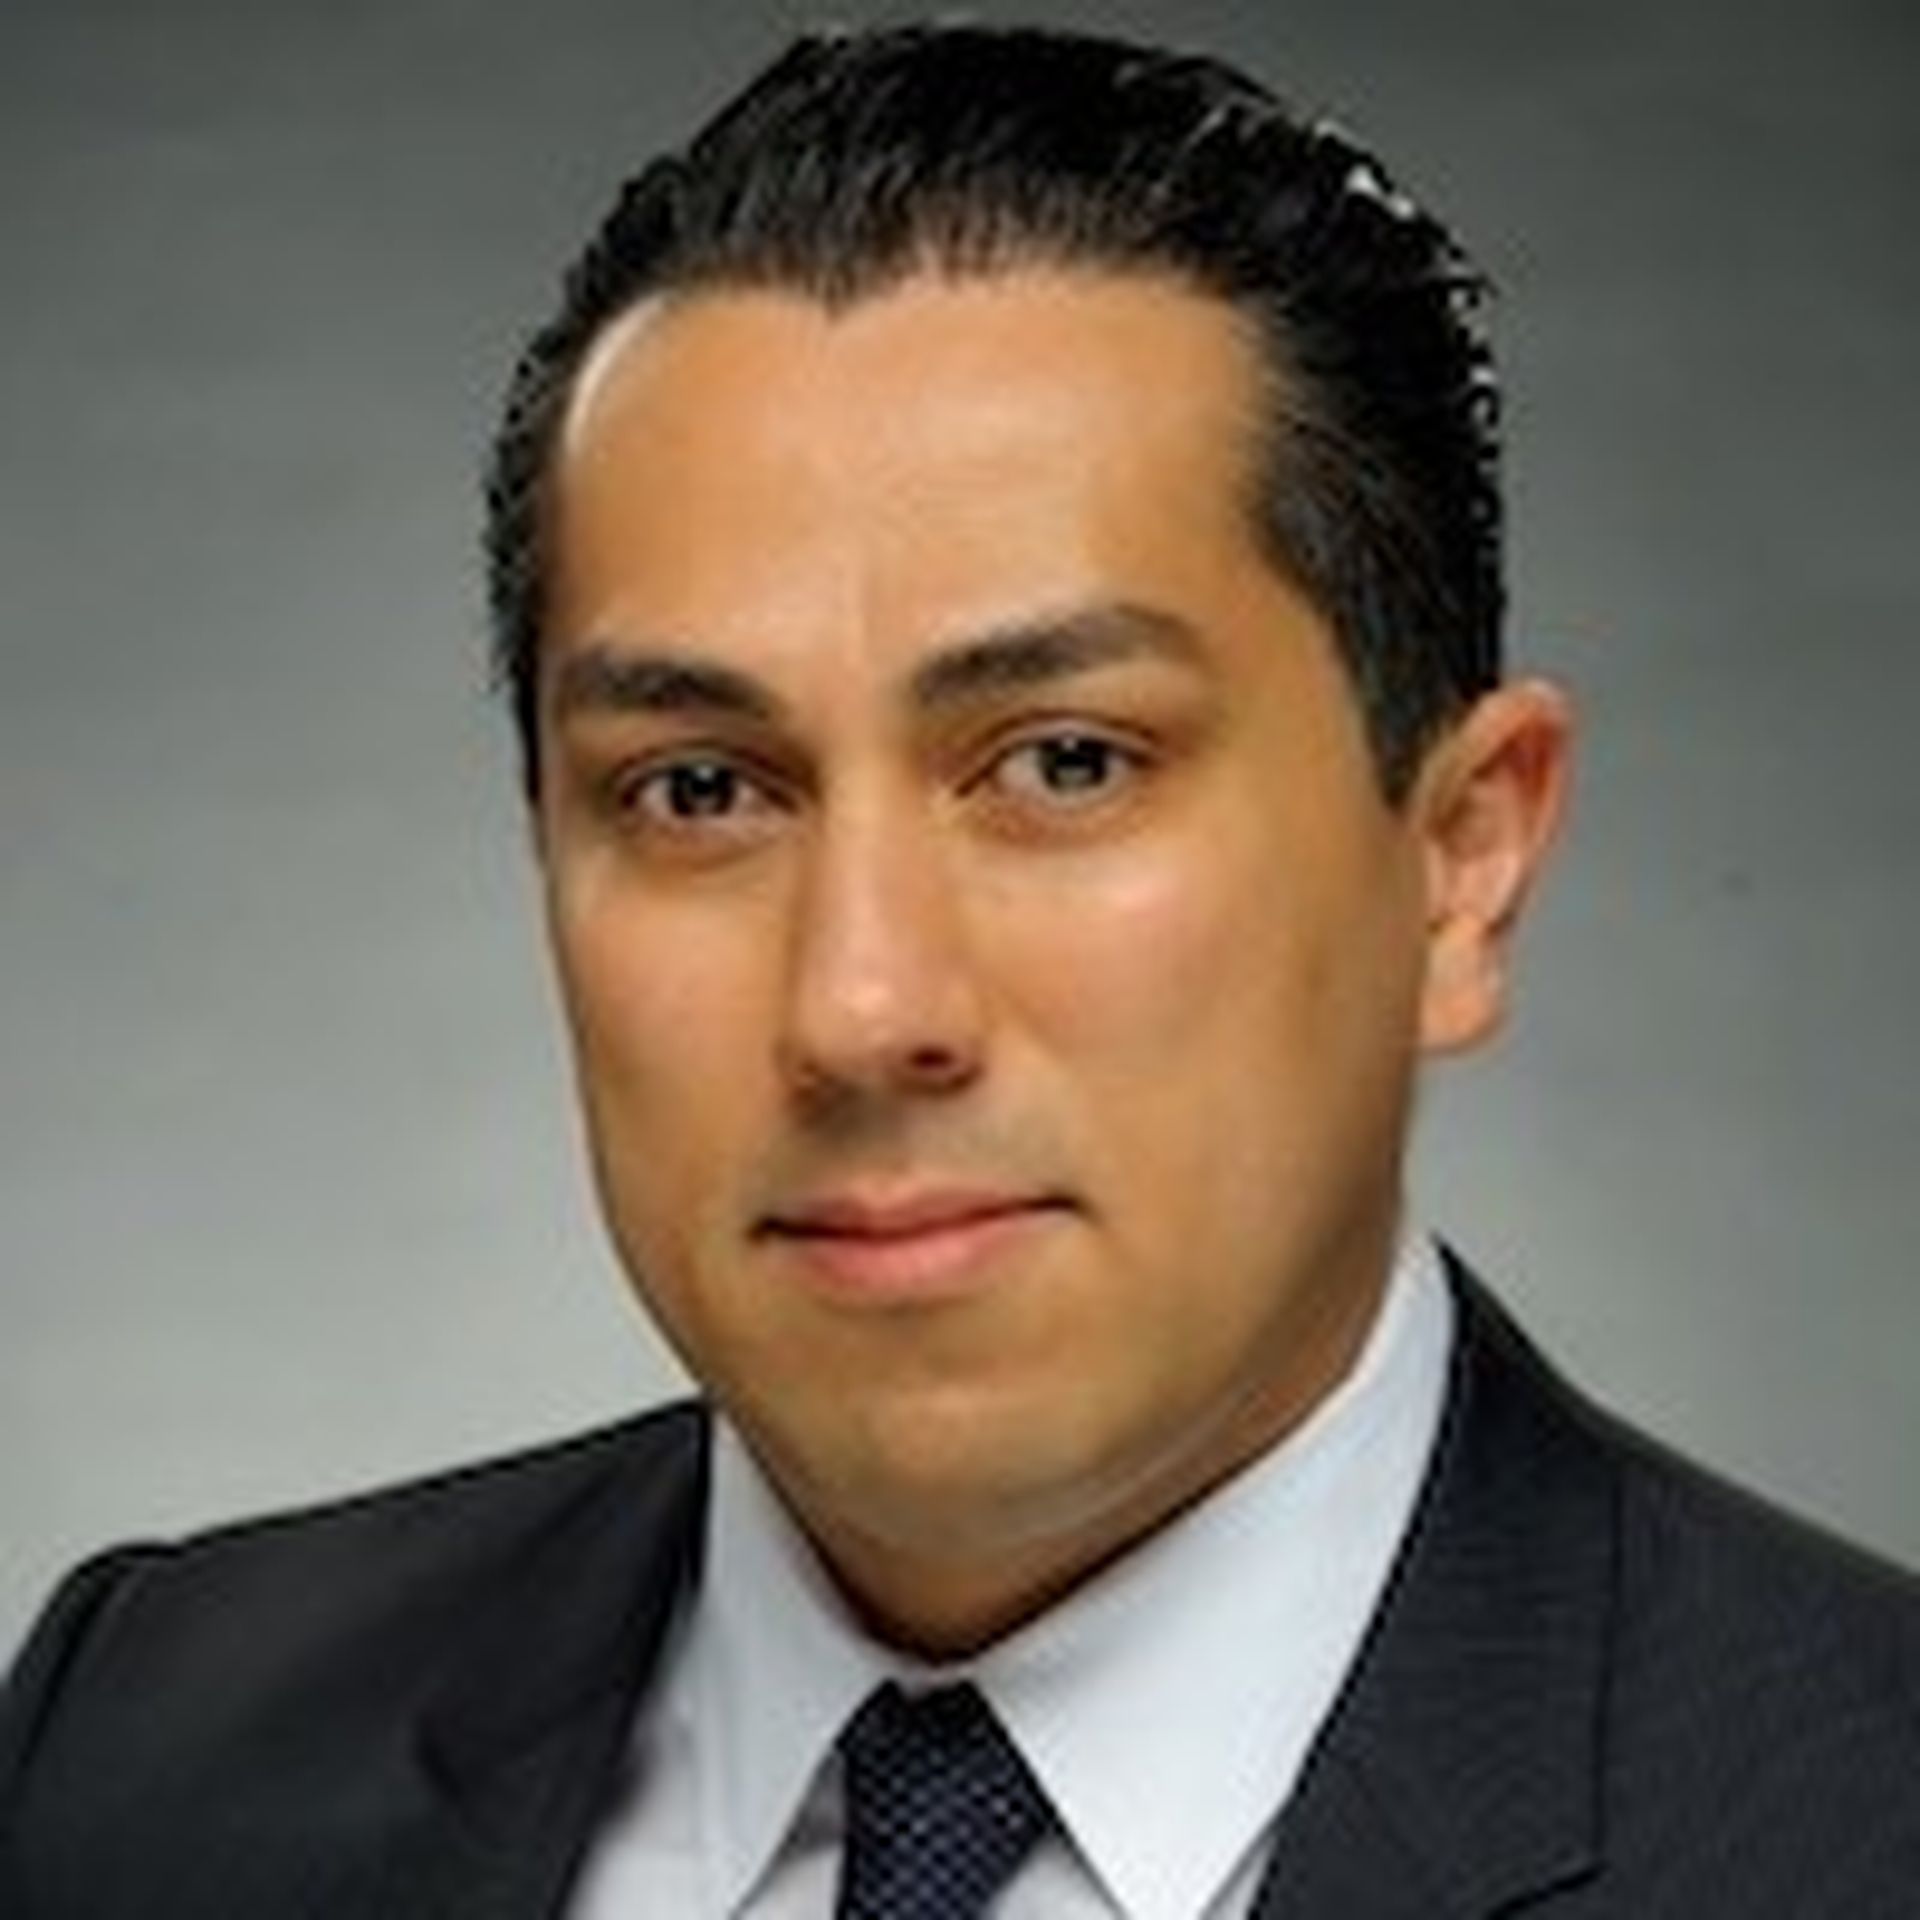 Behdad Eghbali, managing partner, Clearlake Capital Group